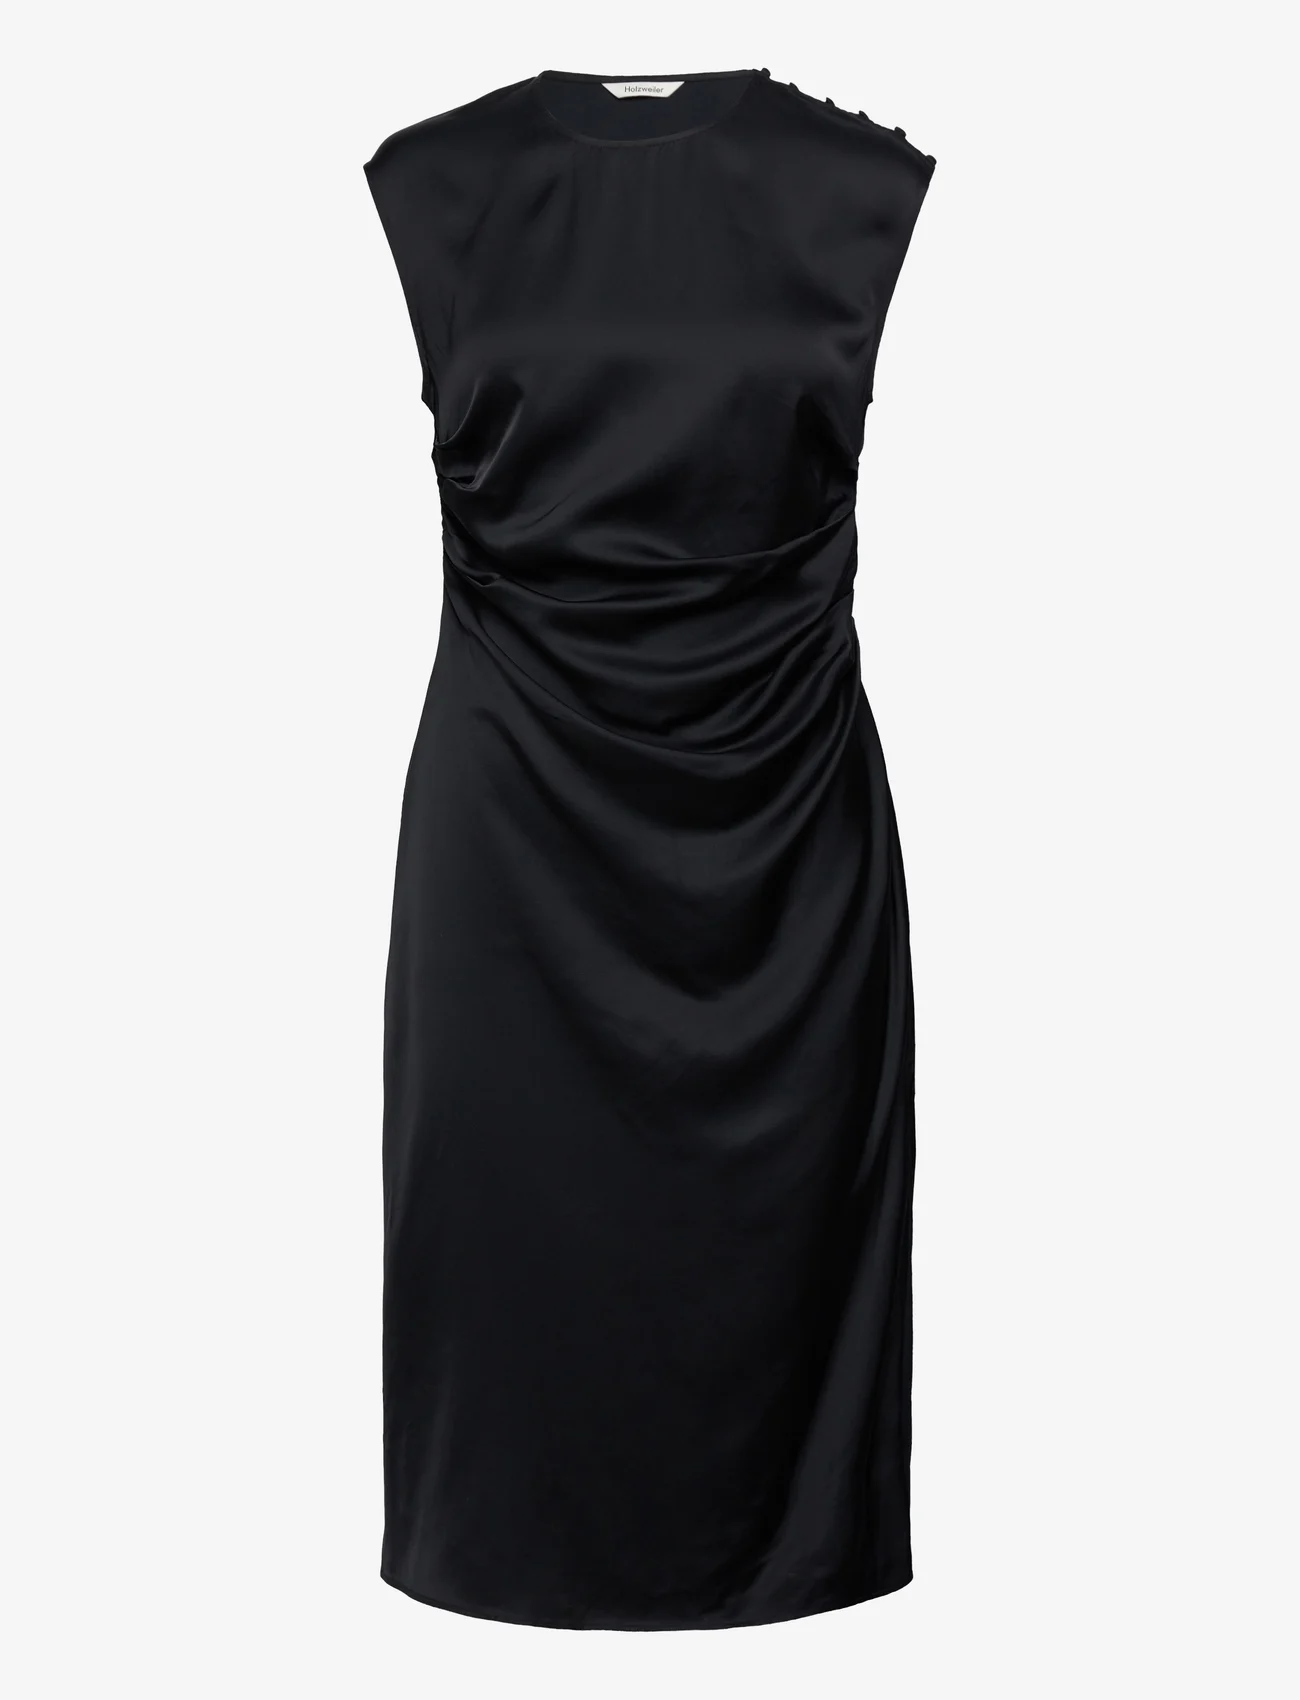 HOLZWEILER - Isabell Dress - black - 0